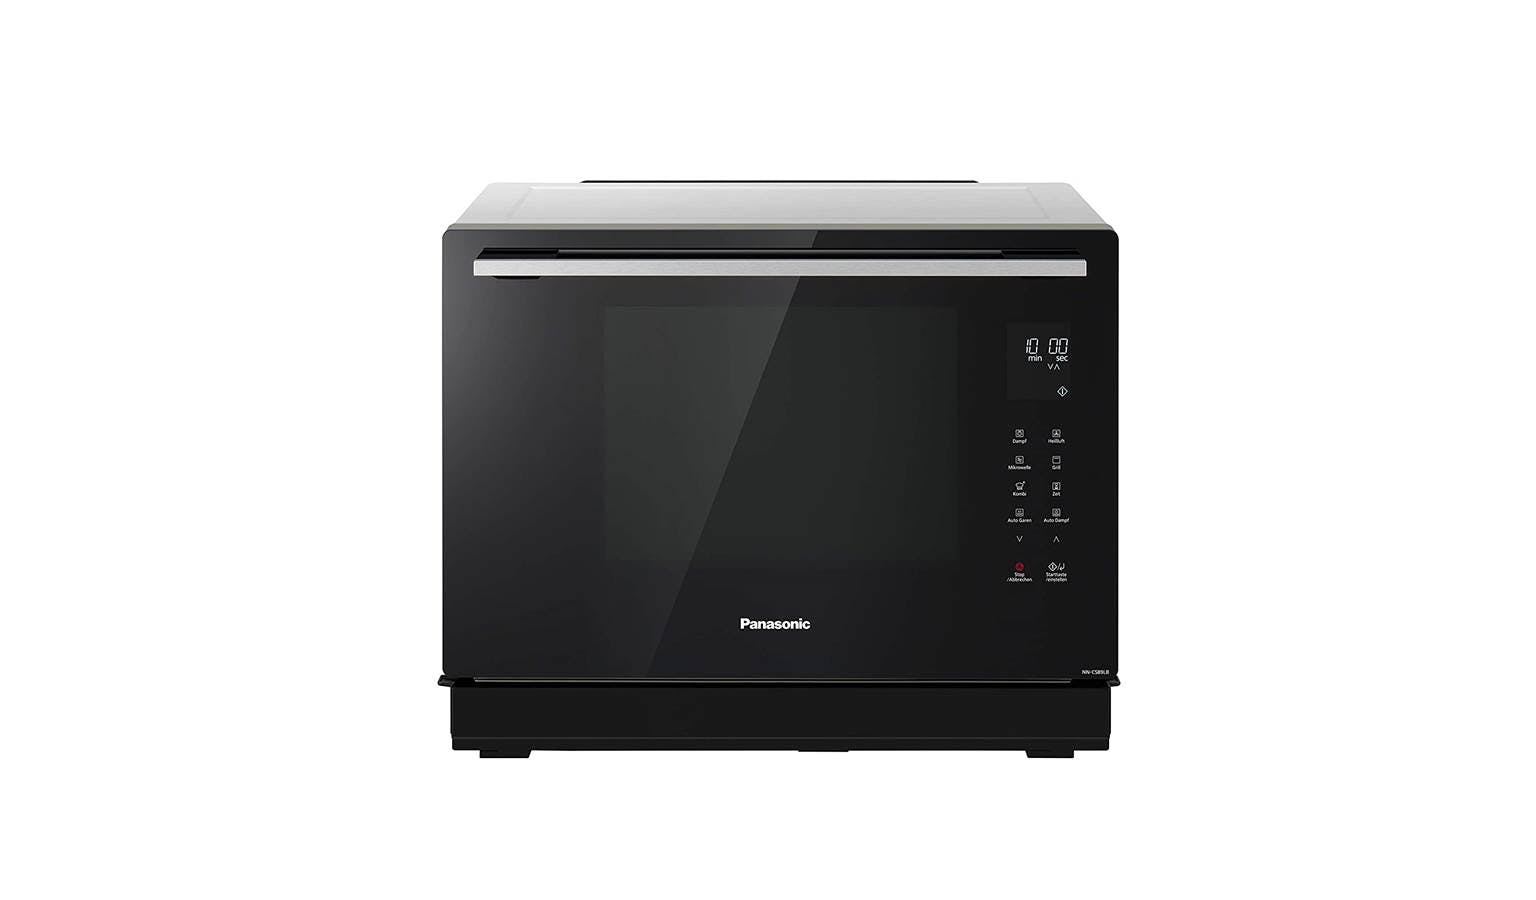 Review - Panasonic Steam Combination Microwave